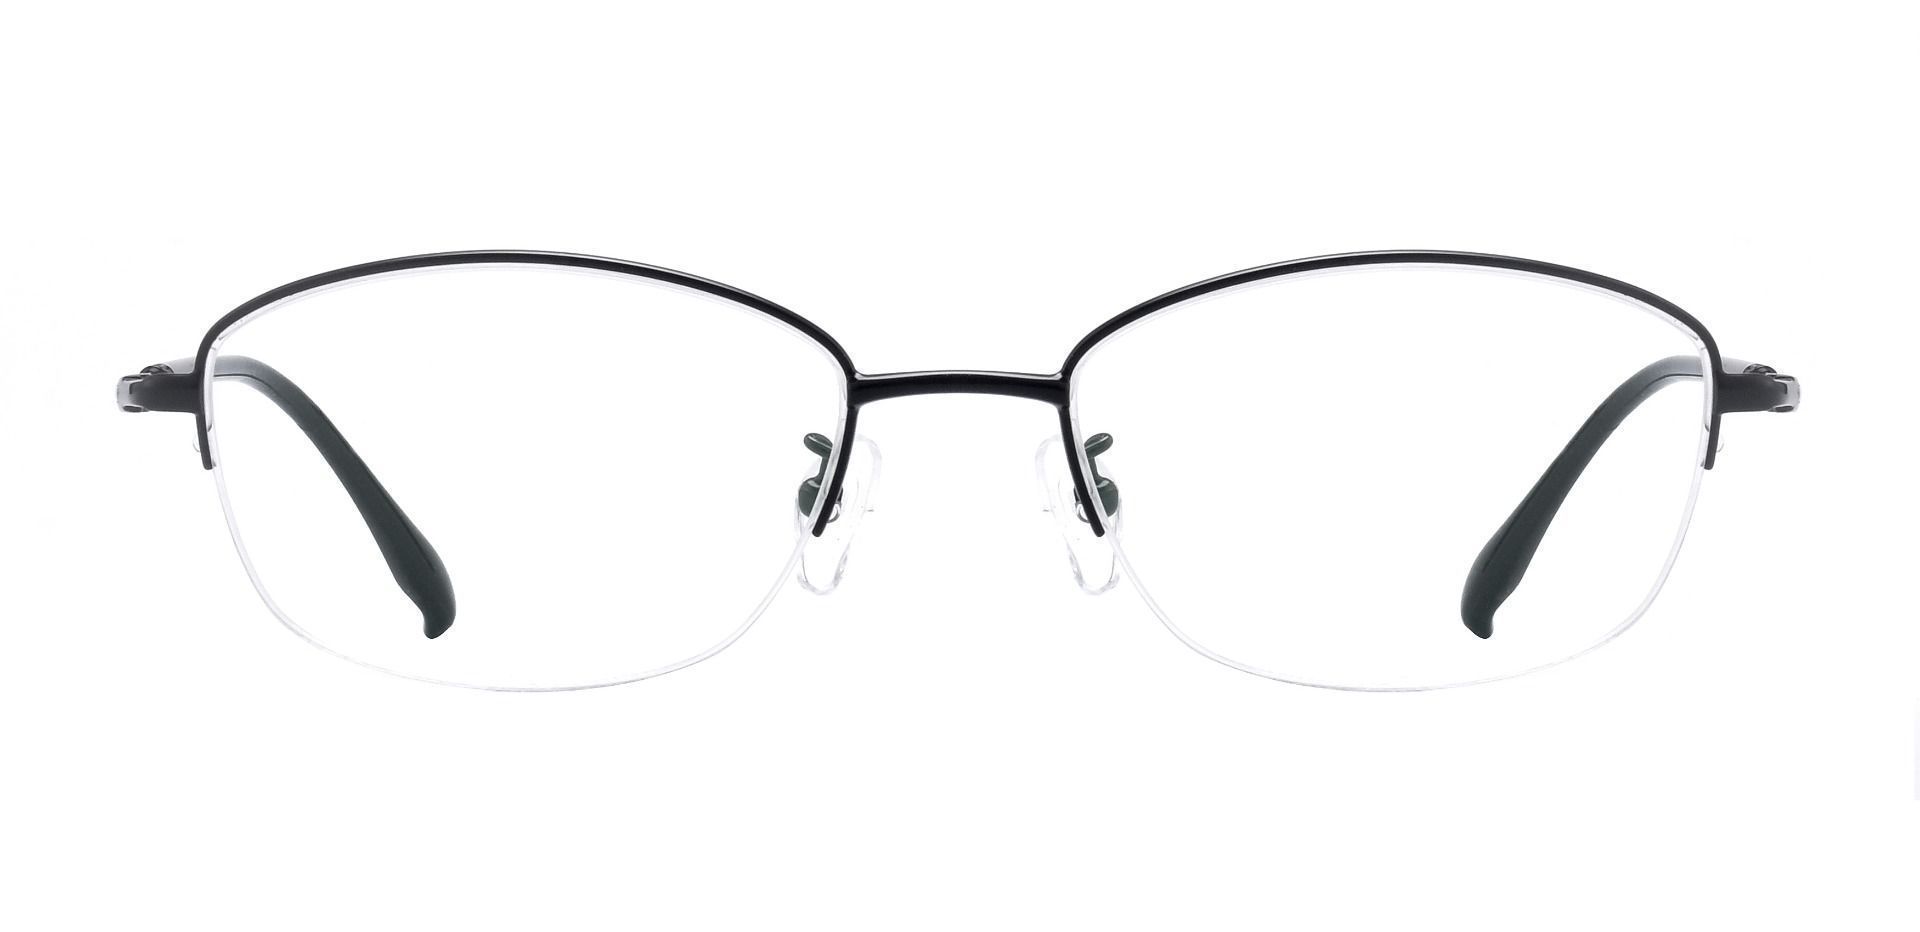 Mendoza Oval Reading Glasses - Black